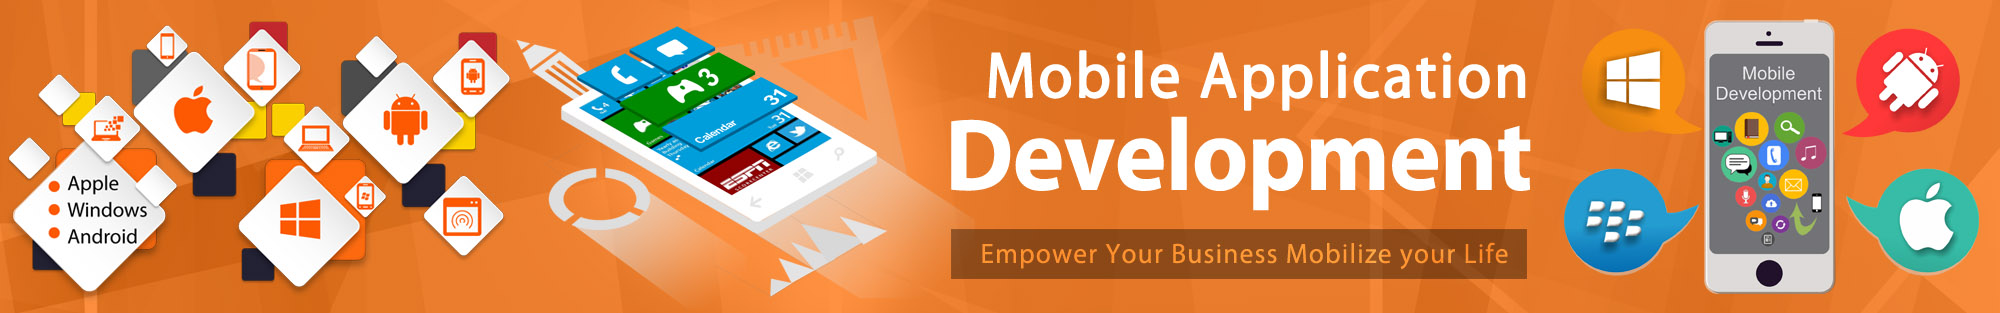 Mobile App Development service Mumbai India - Technowebsy